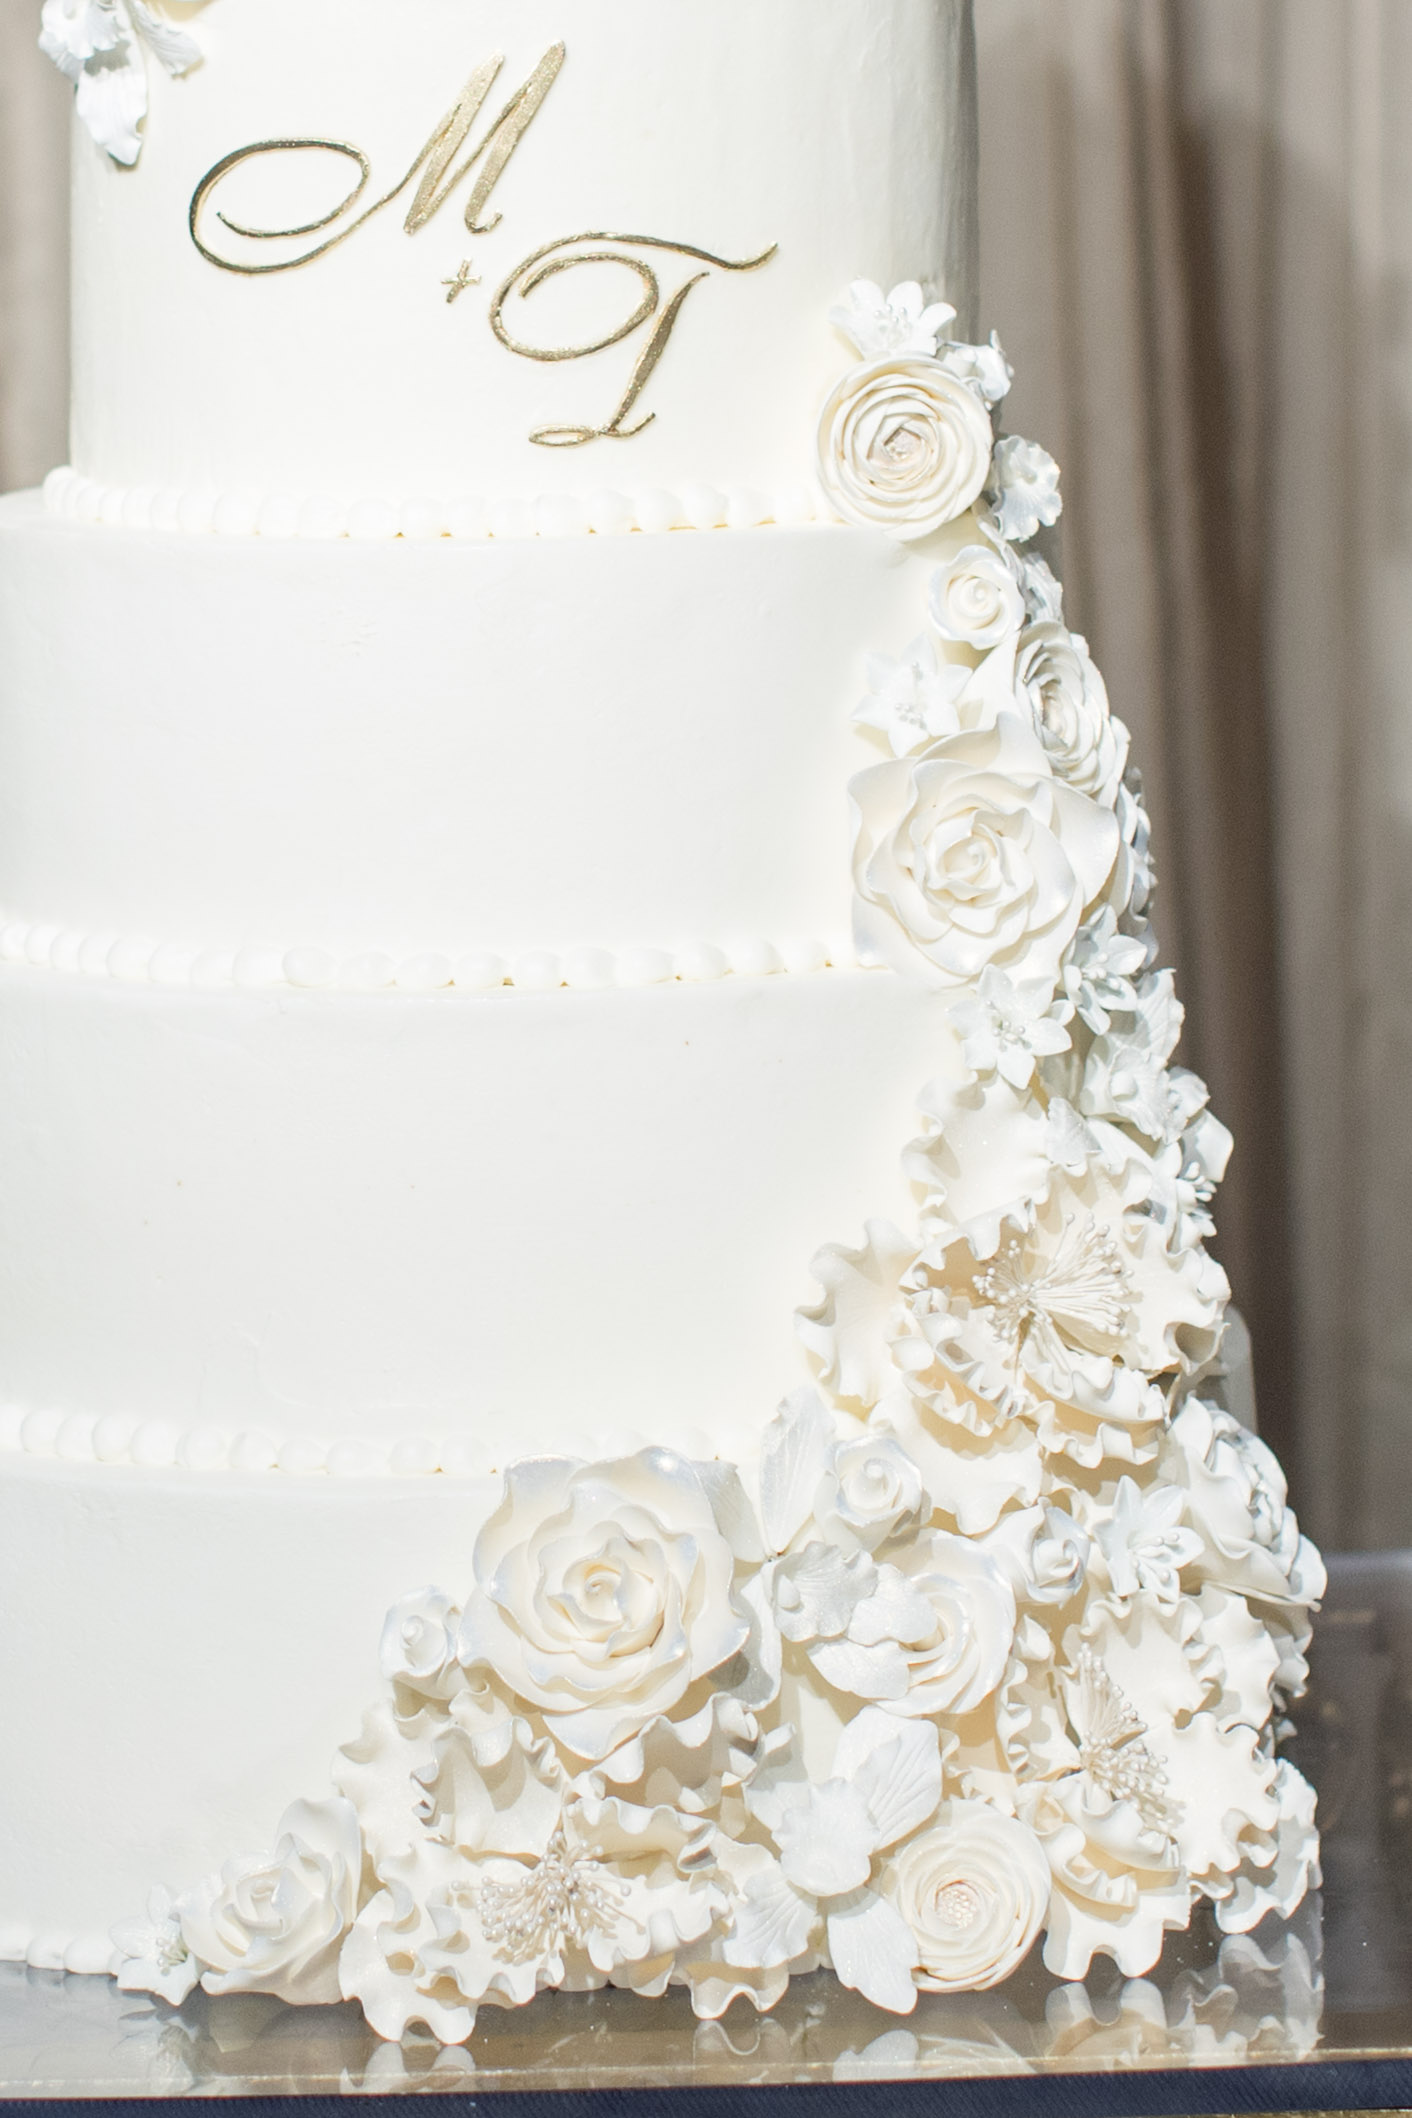 Sugar flowers on large white wedding cake.